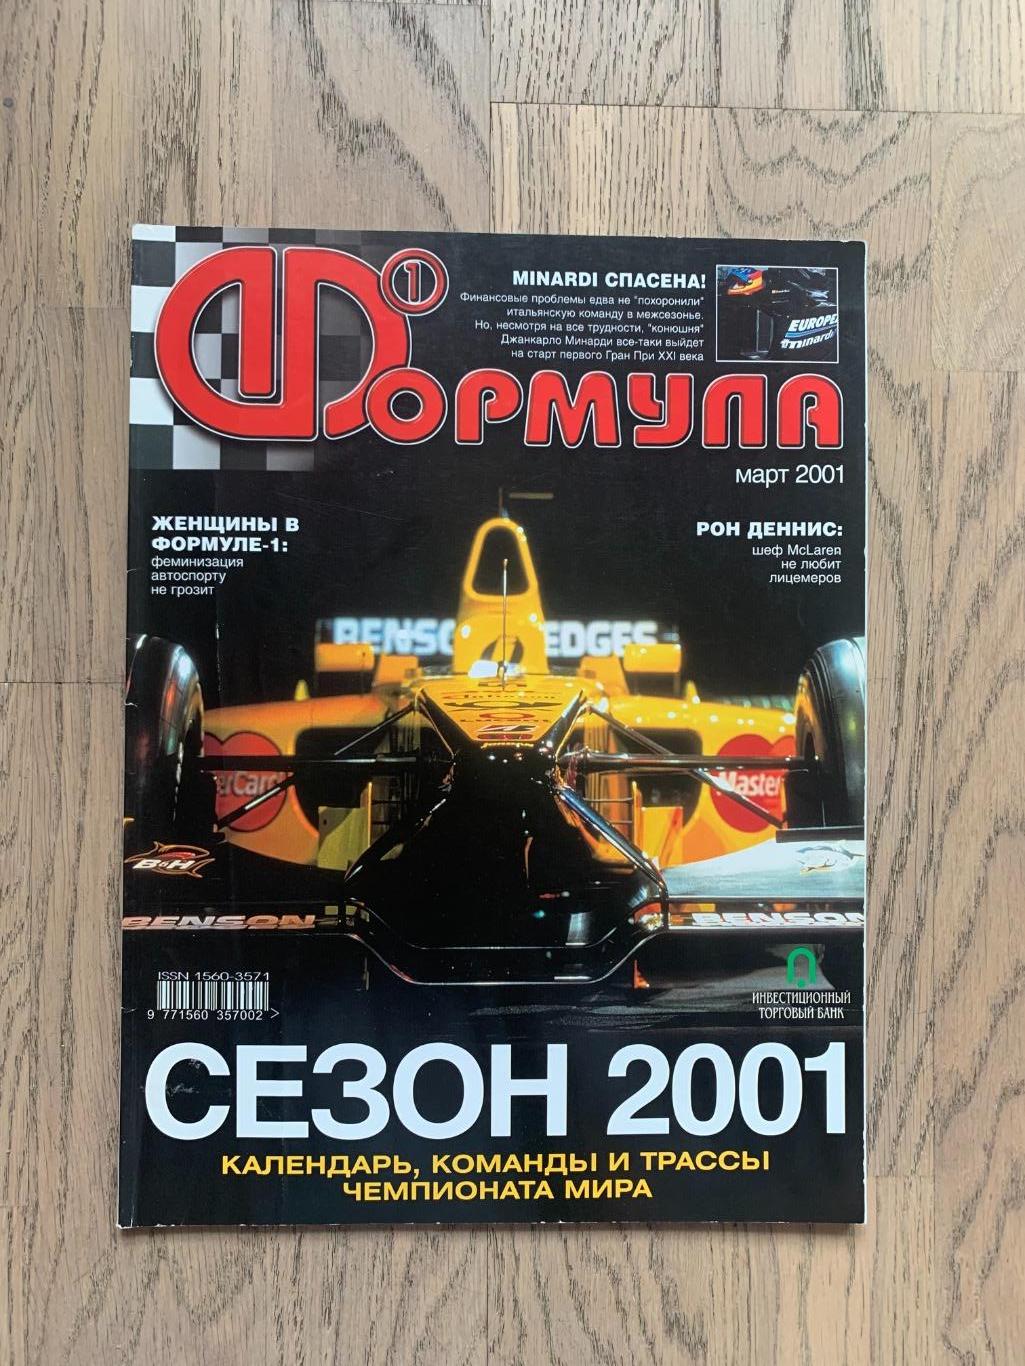 Журнал Формула 1 (Formula Magazine) / март 2001